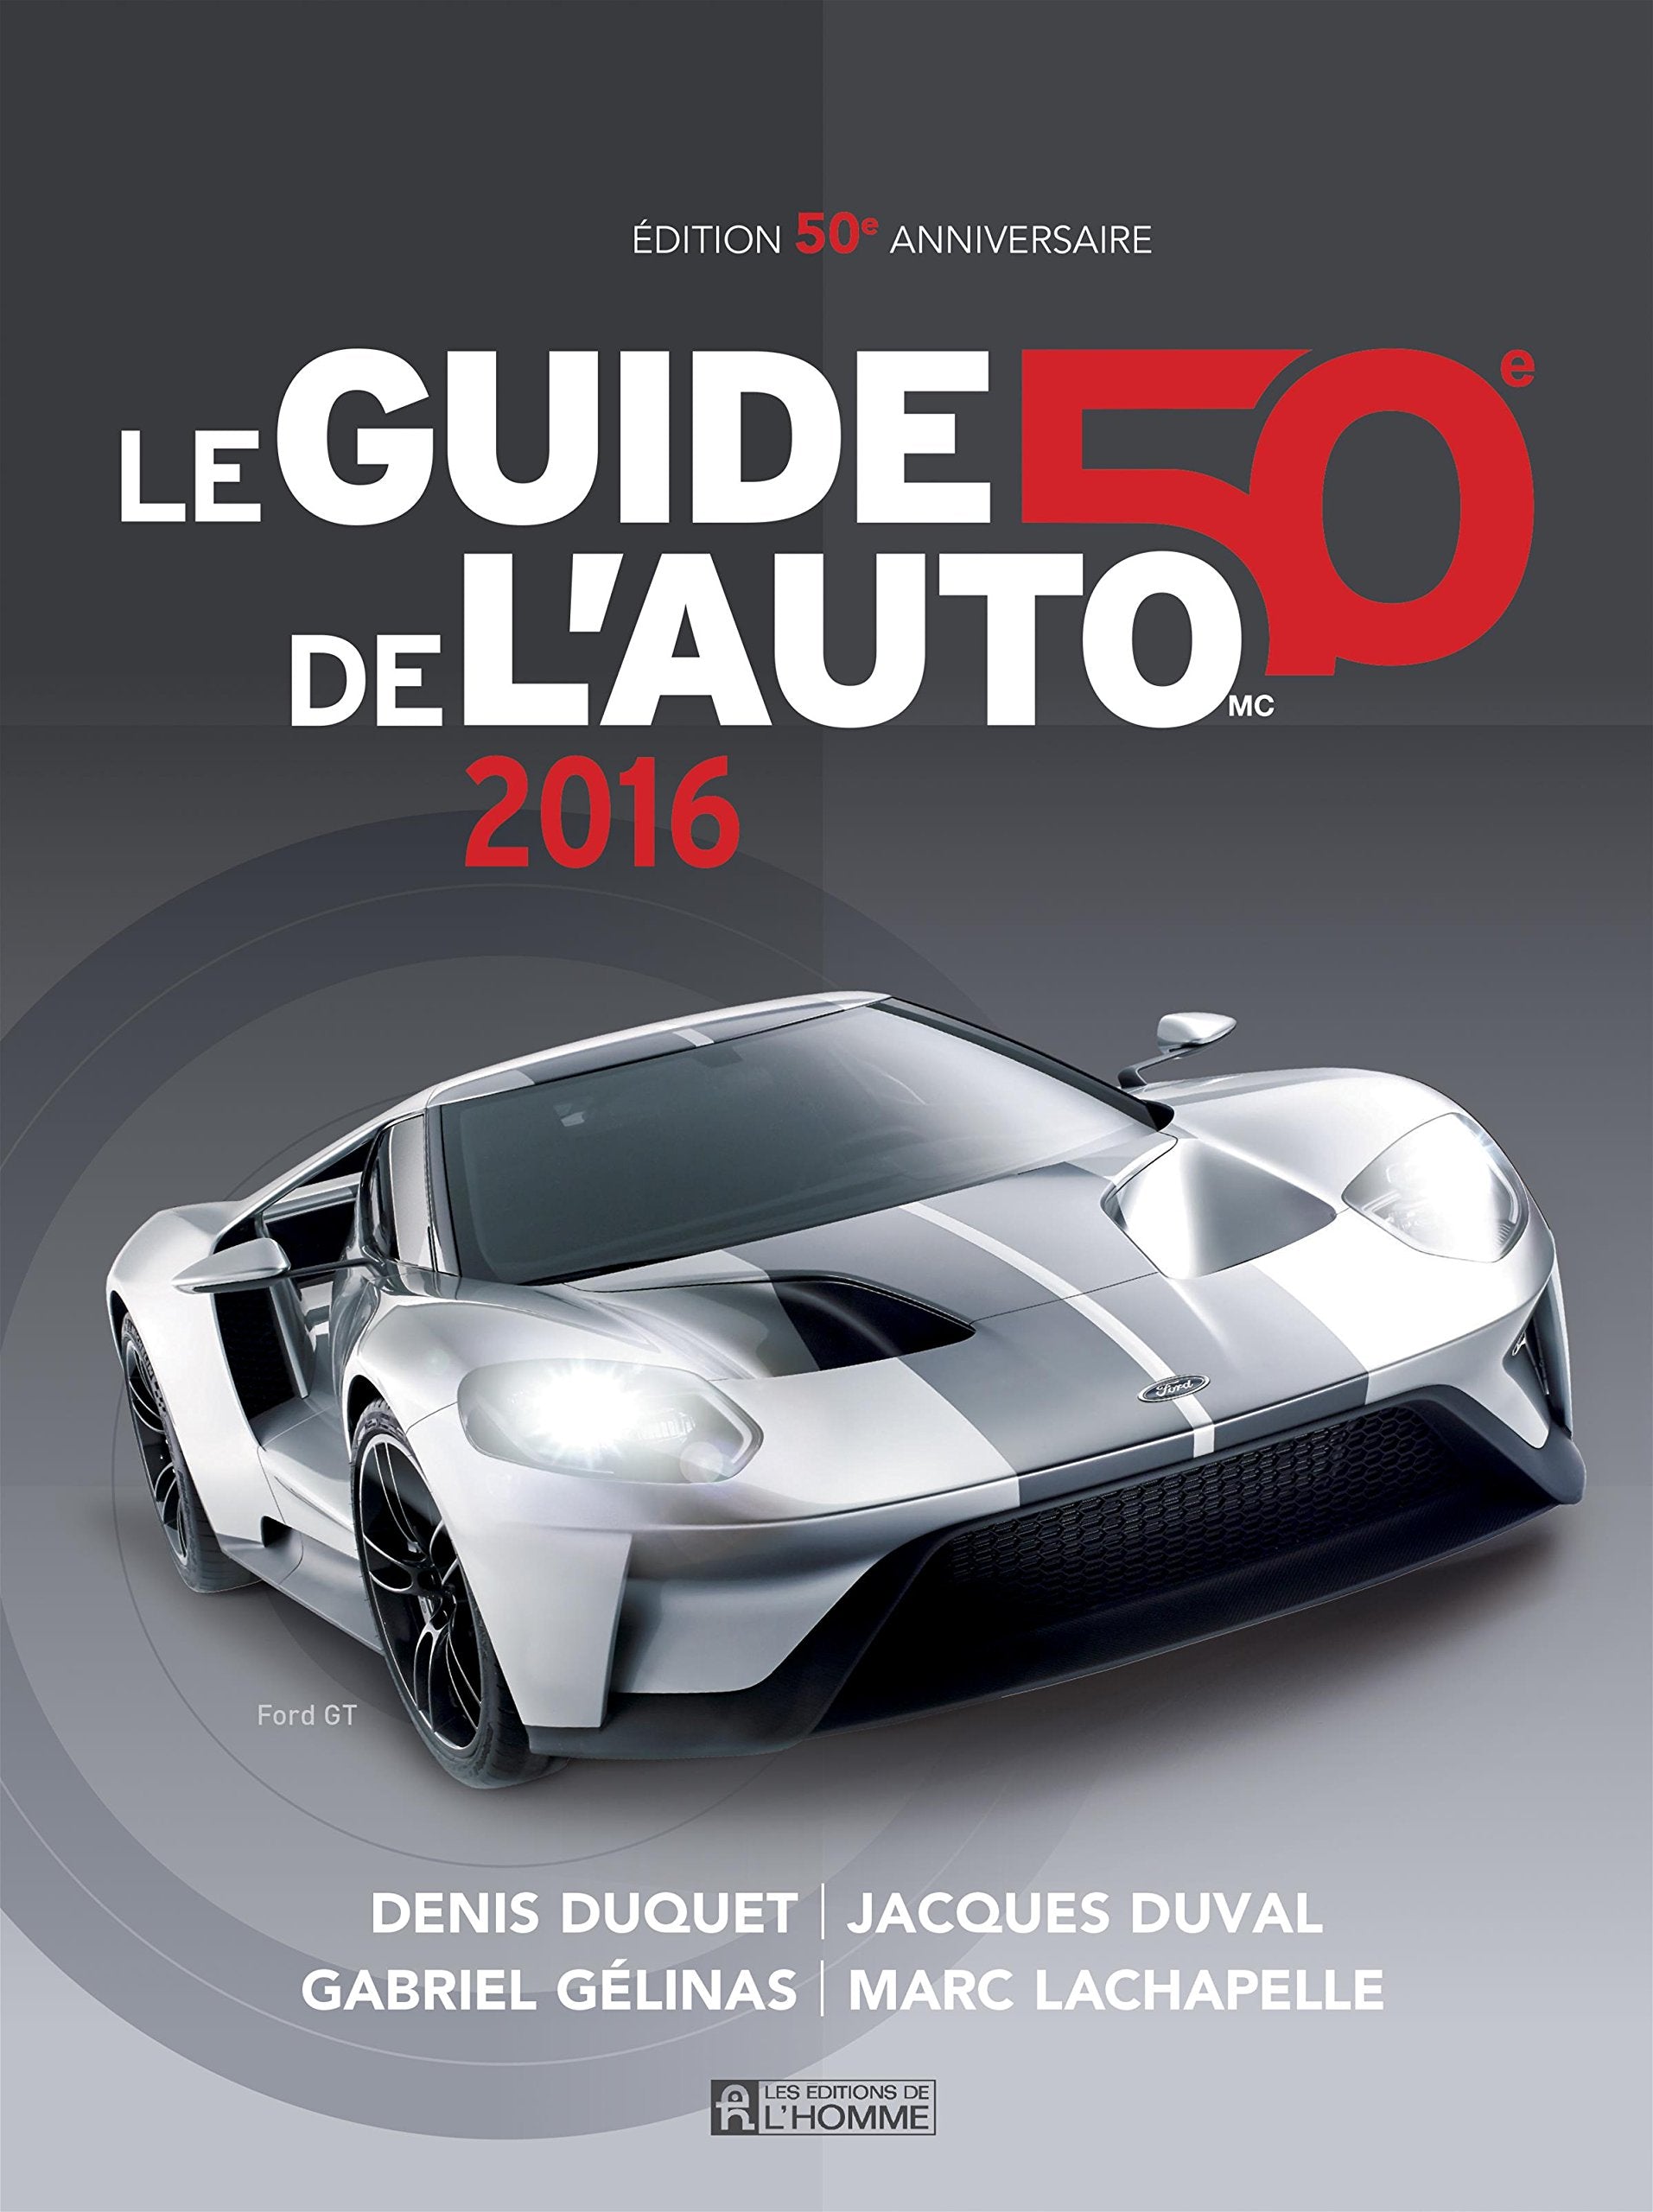 Le Guide de l'Auto 2016